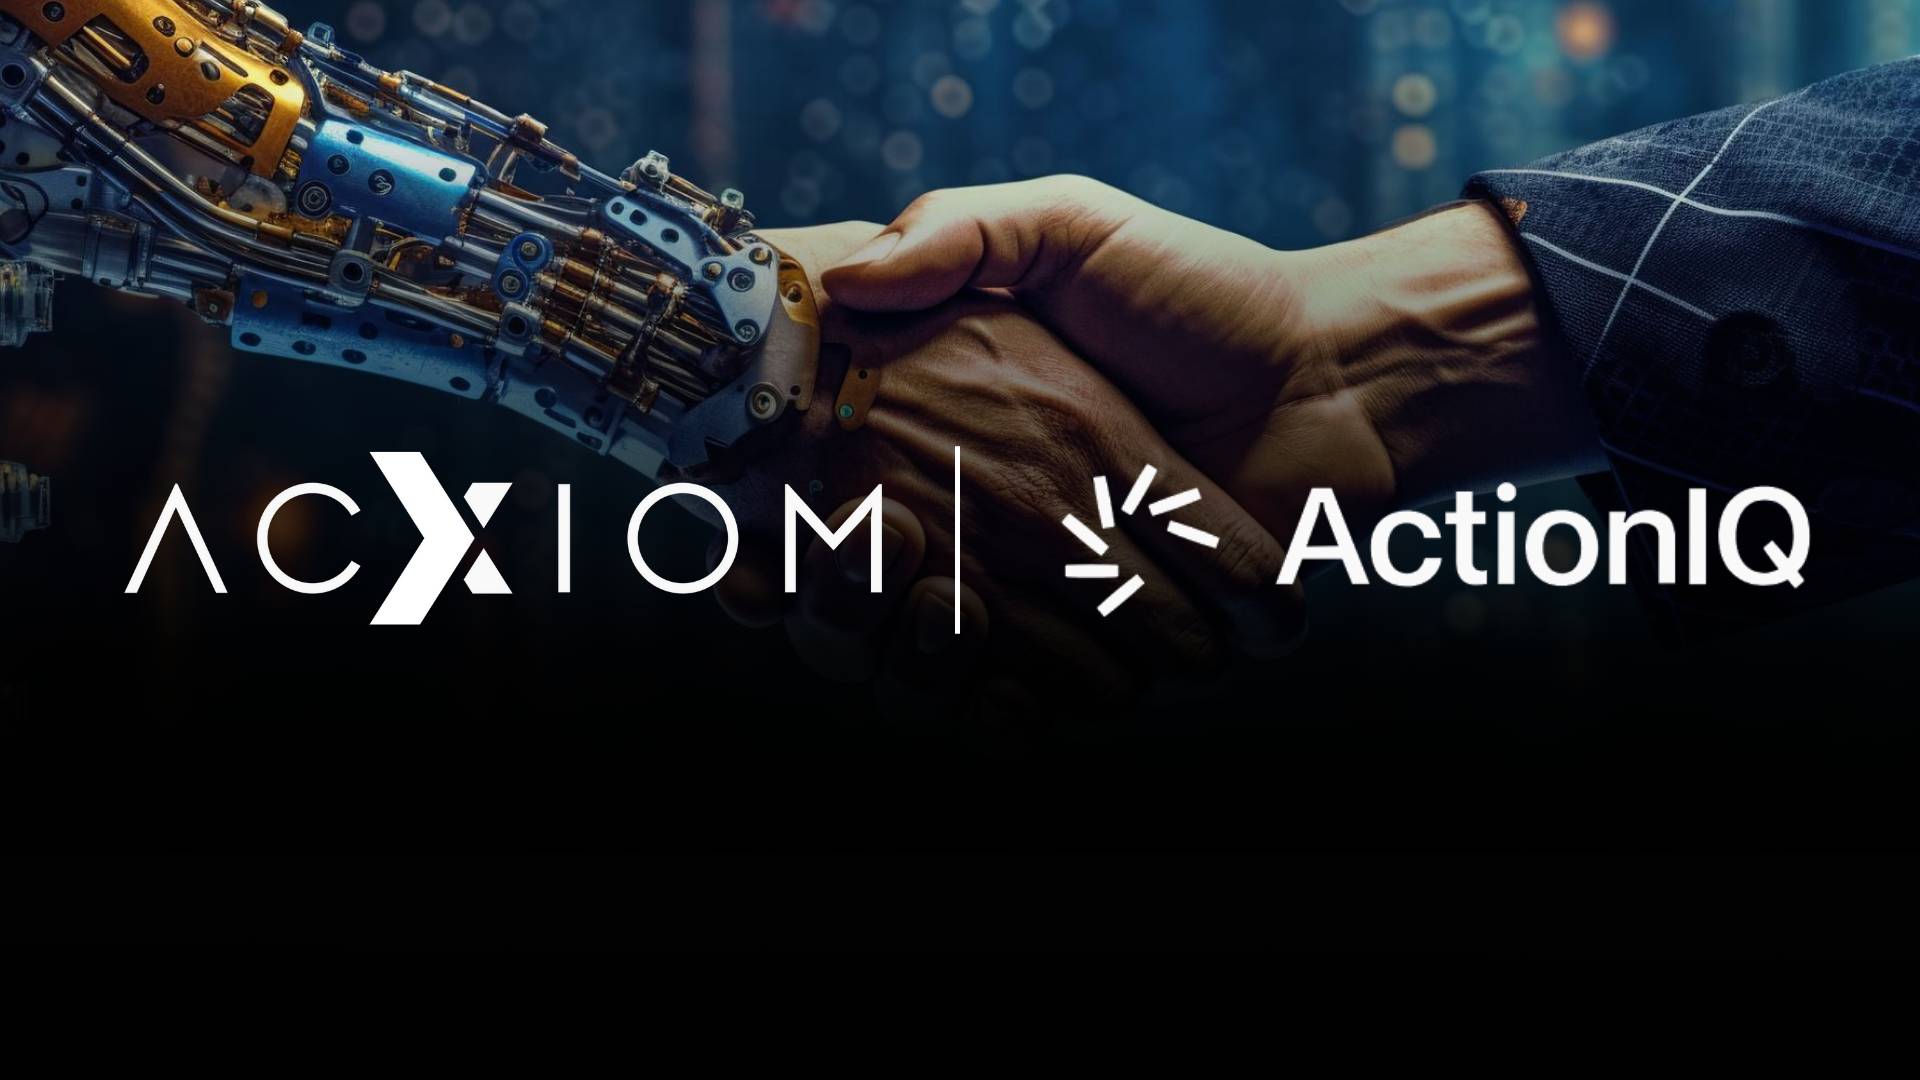 Acxiom and ActionIQ Partner to Revolutionize Customer Data Management and Marketing